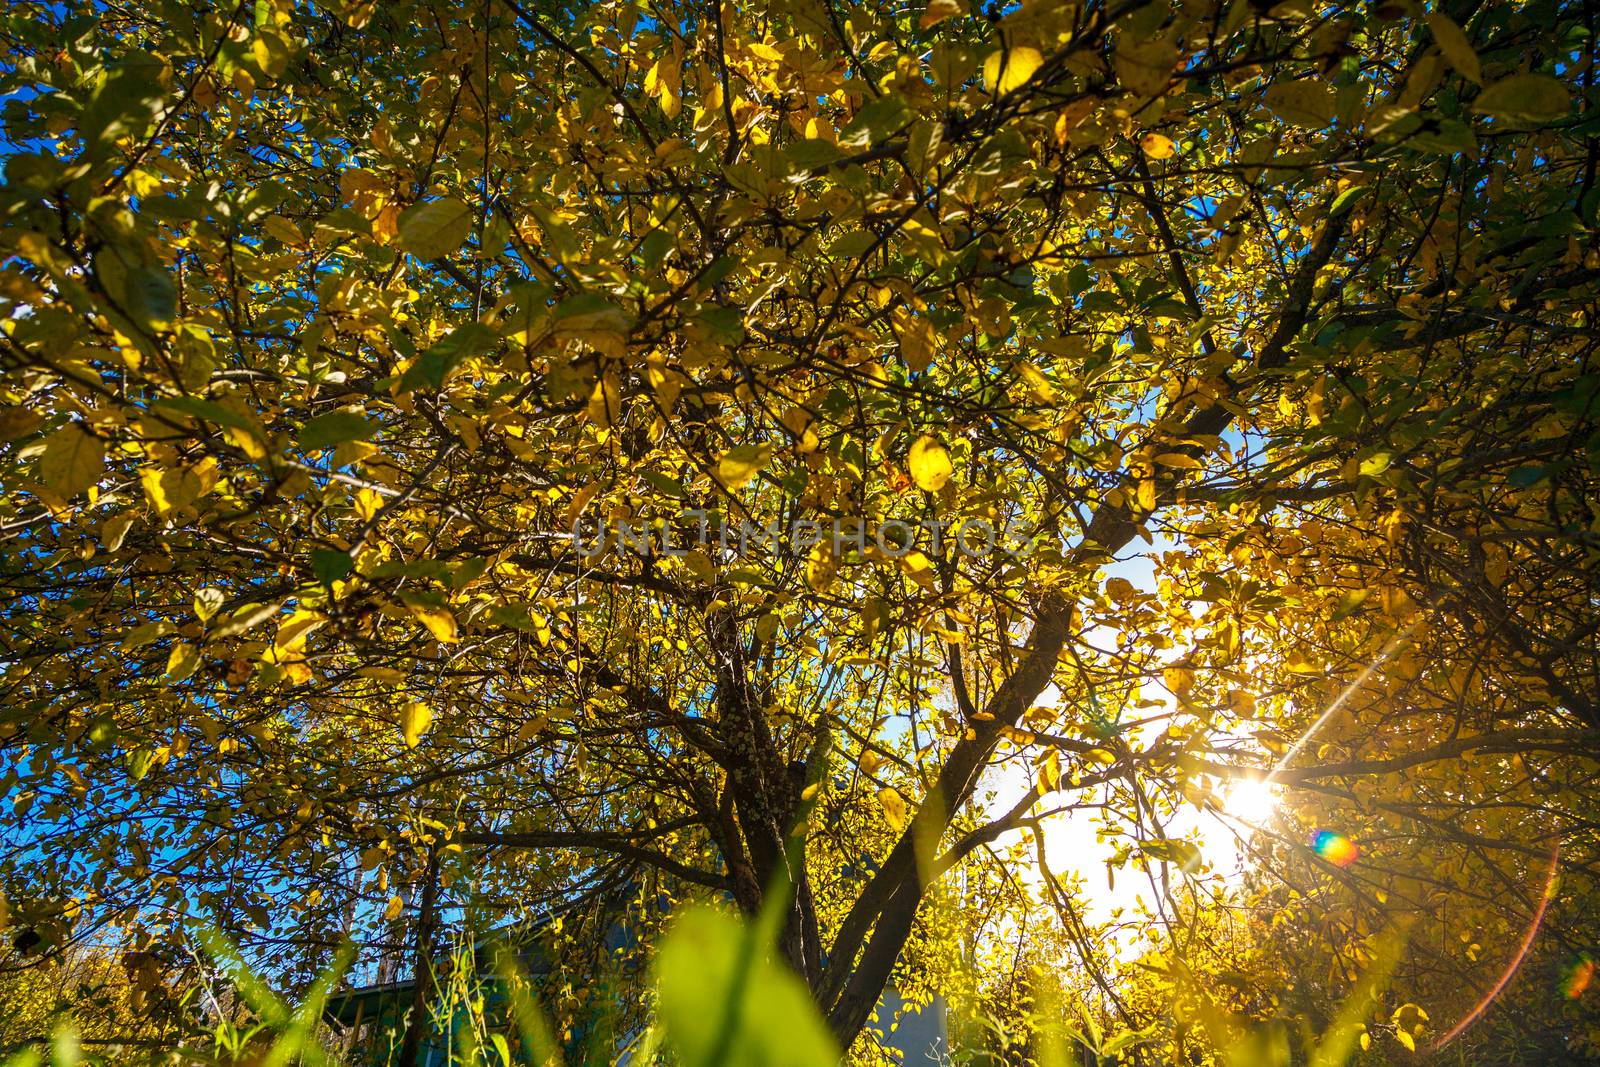 Sunlight in autumn garden by AGorohov